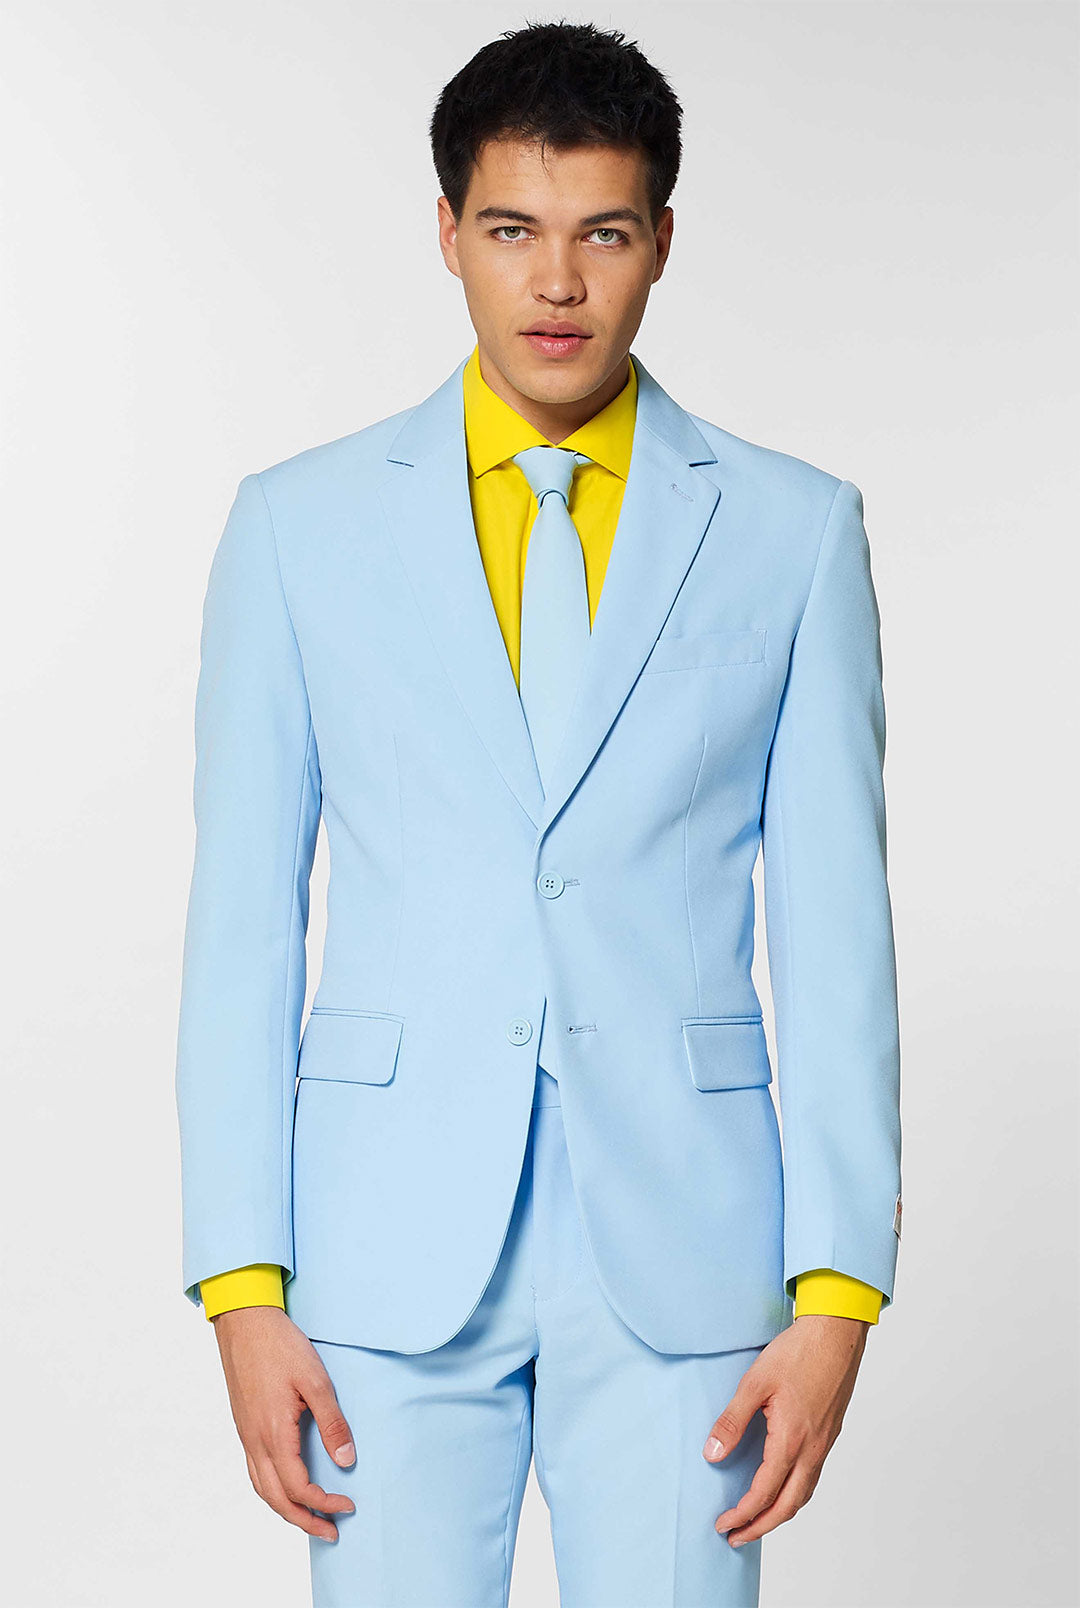 Mens 3 Piece Linen Suit Summer Breathable Wedding Cotton Baby Blue Light:  Buy Online - Happy Gentleman United States